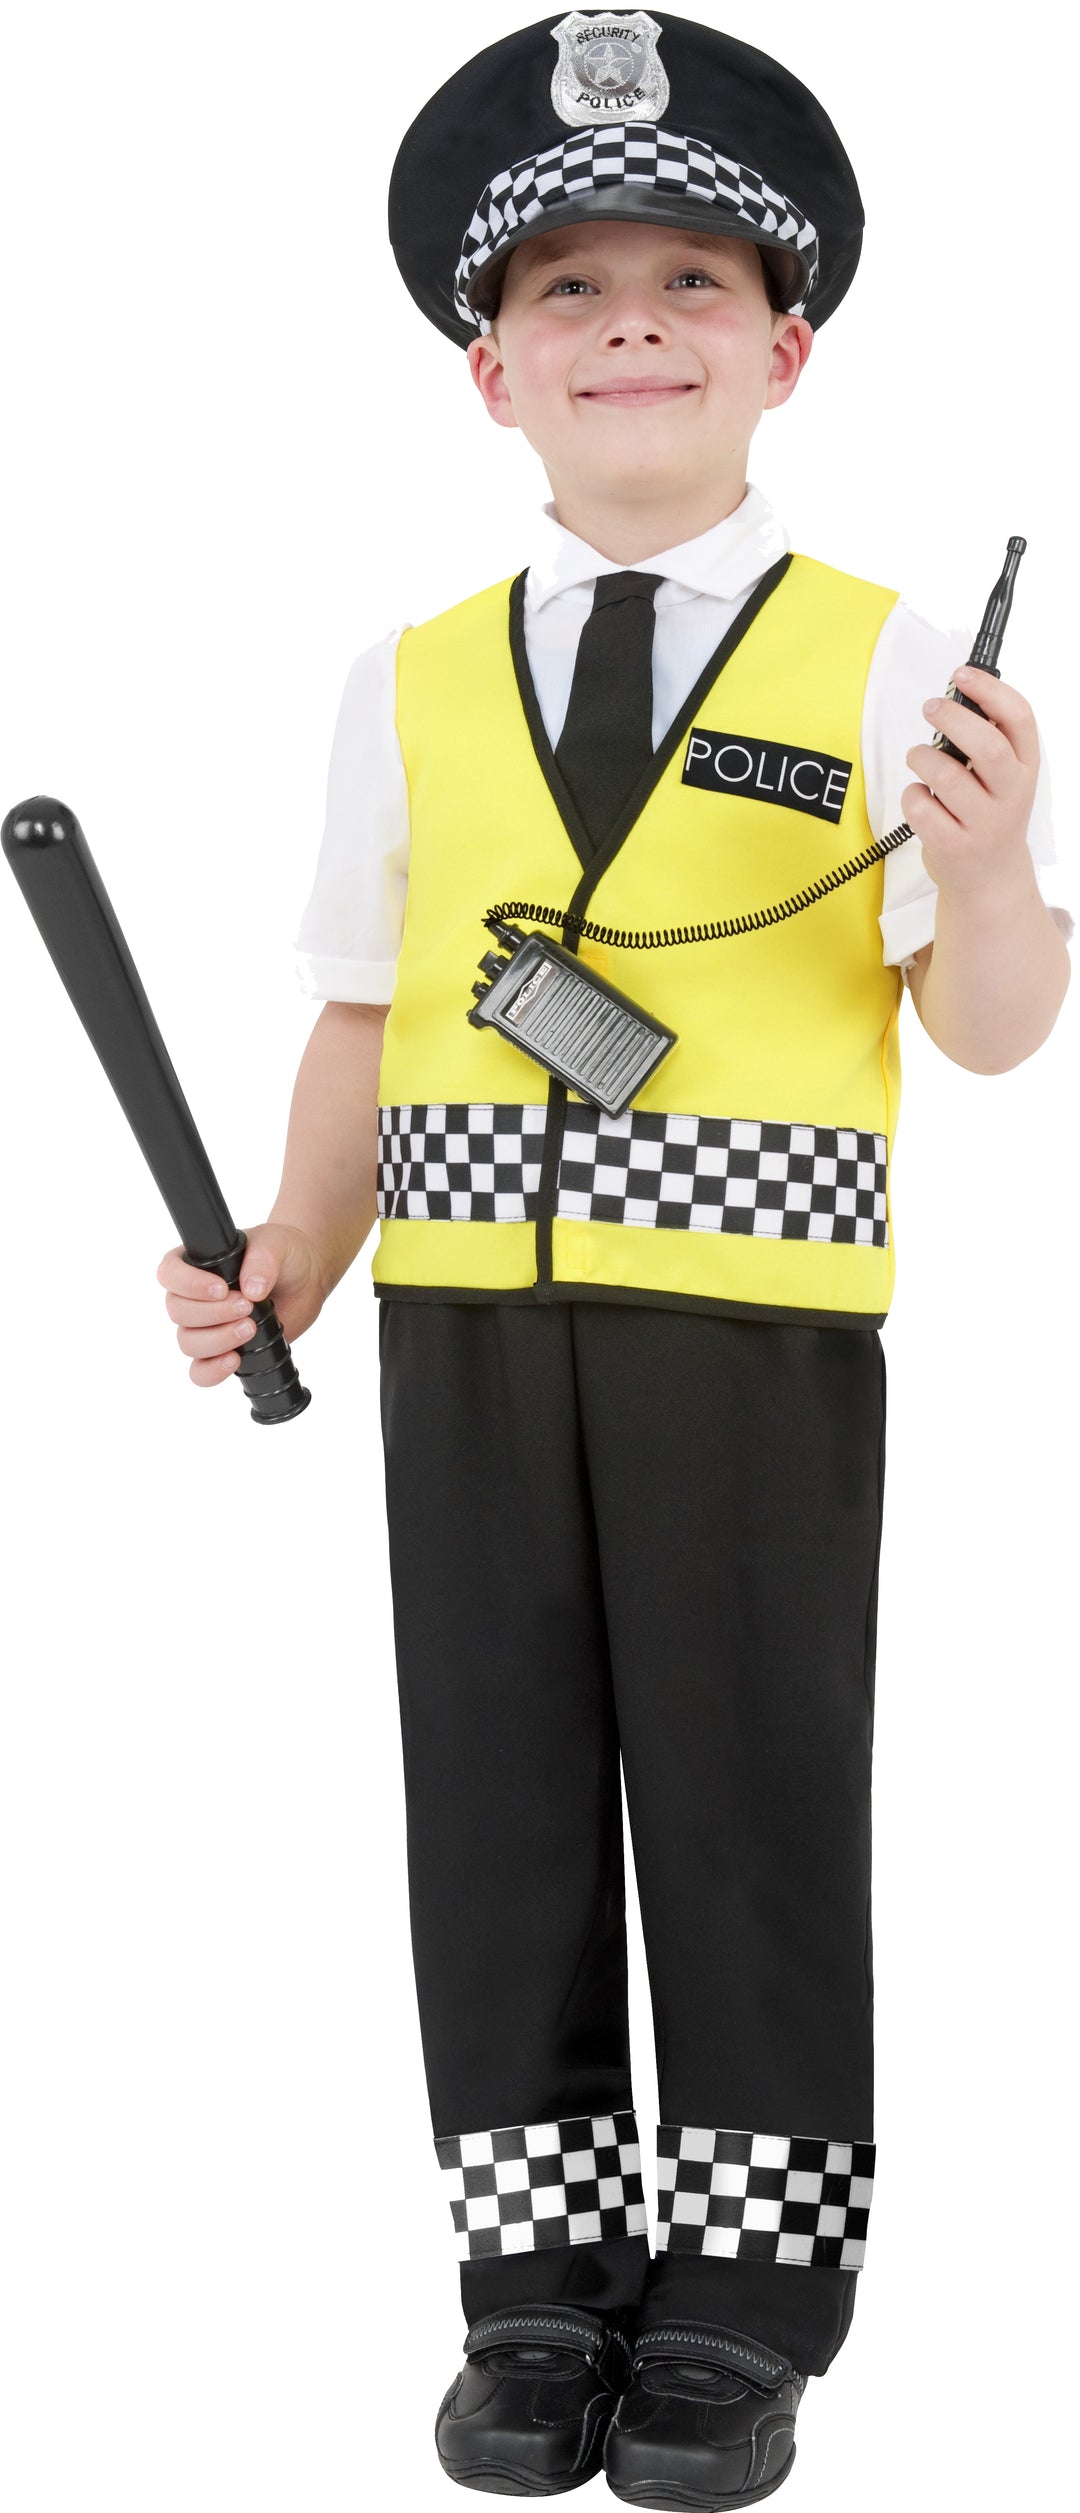 Kids Cop Costumes Police Uniform Fancy Dress for Boys